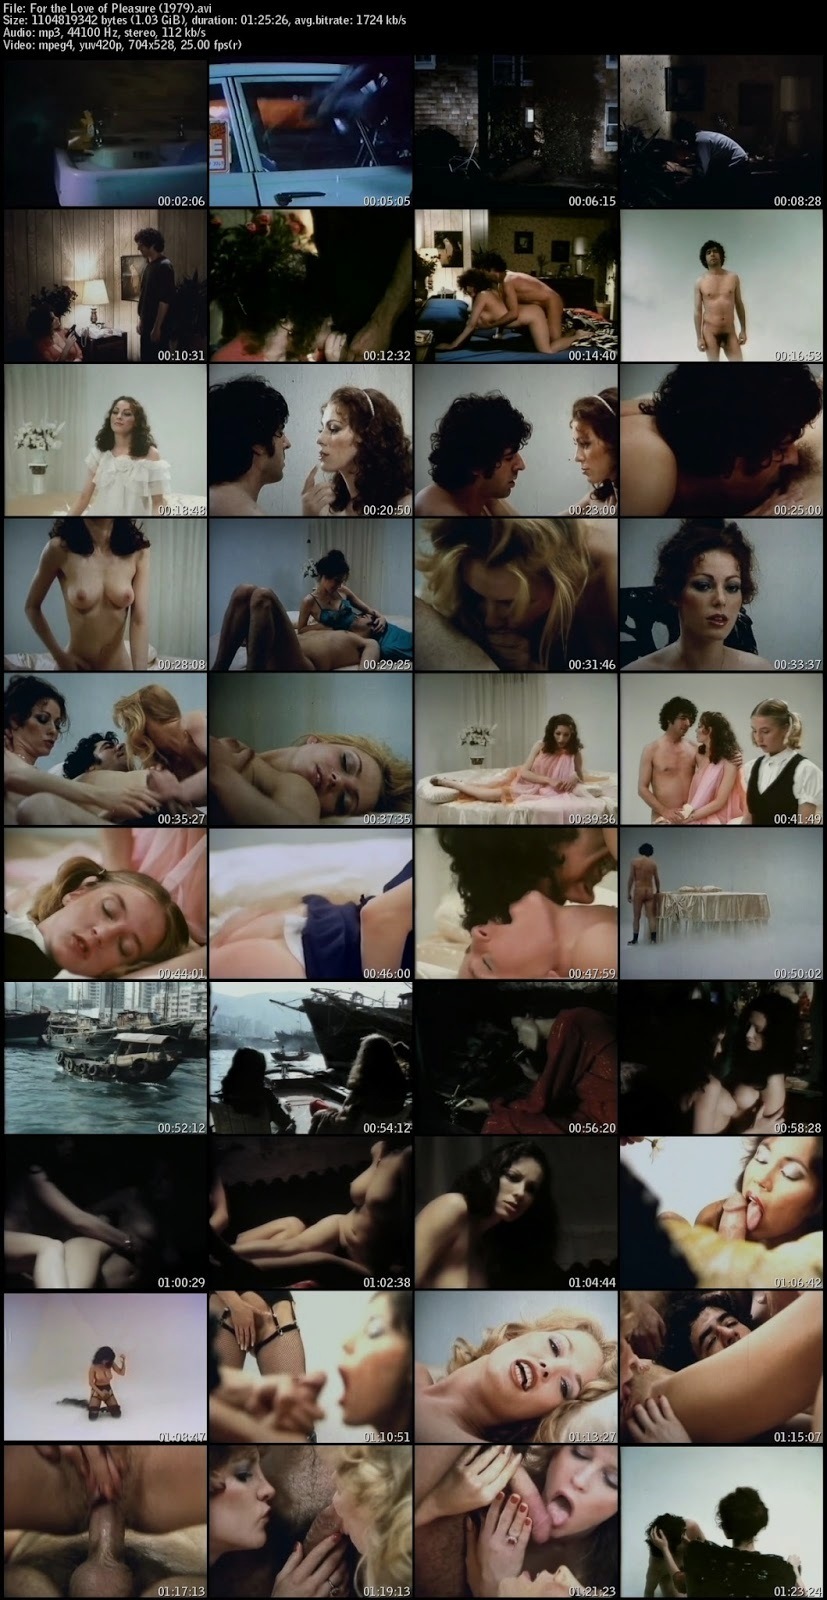 For the Love of Pleasure (1979) EroGarga Watch Free Vintage Porn Movies, Retro Sex Videos, Mobile Porn pic